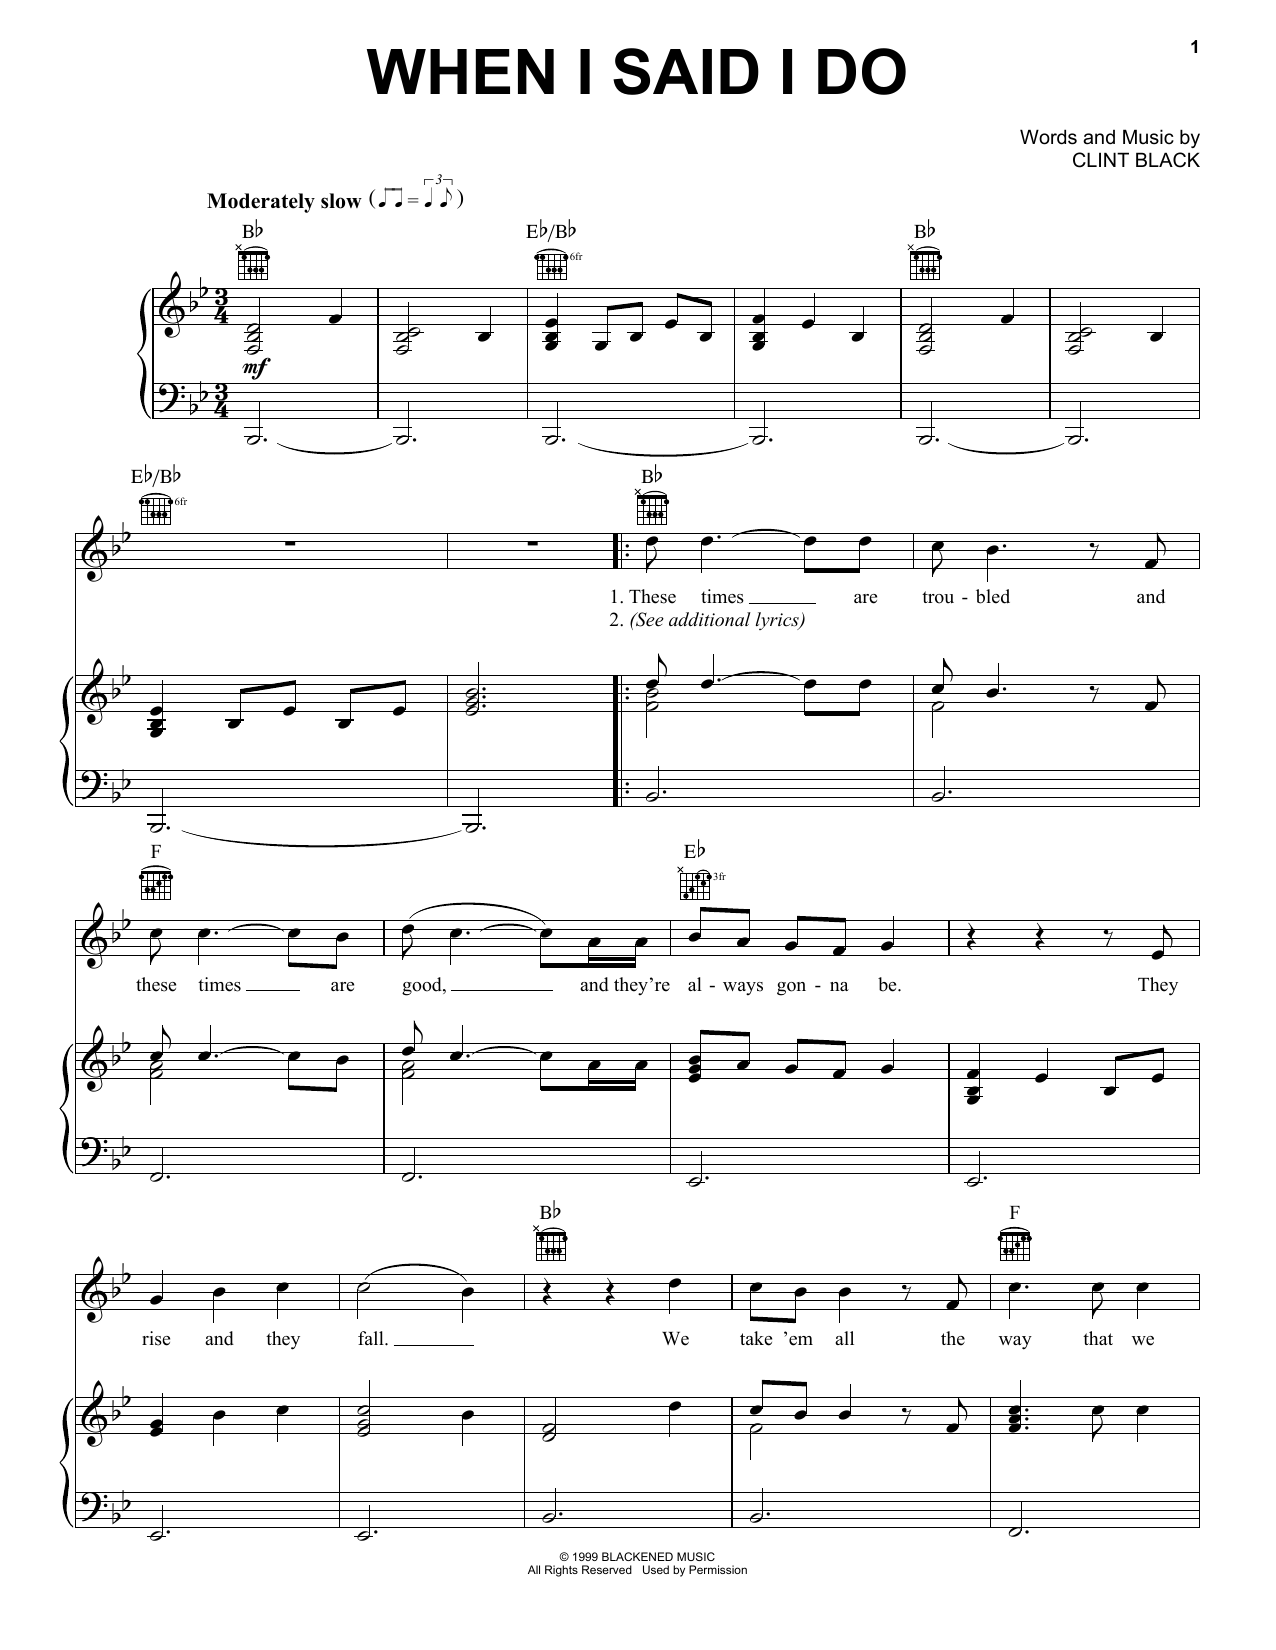 Clint Black "When I Said I Do" Sheet Music Notes | Download Printable Pdf Score 165033